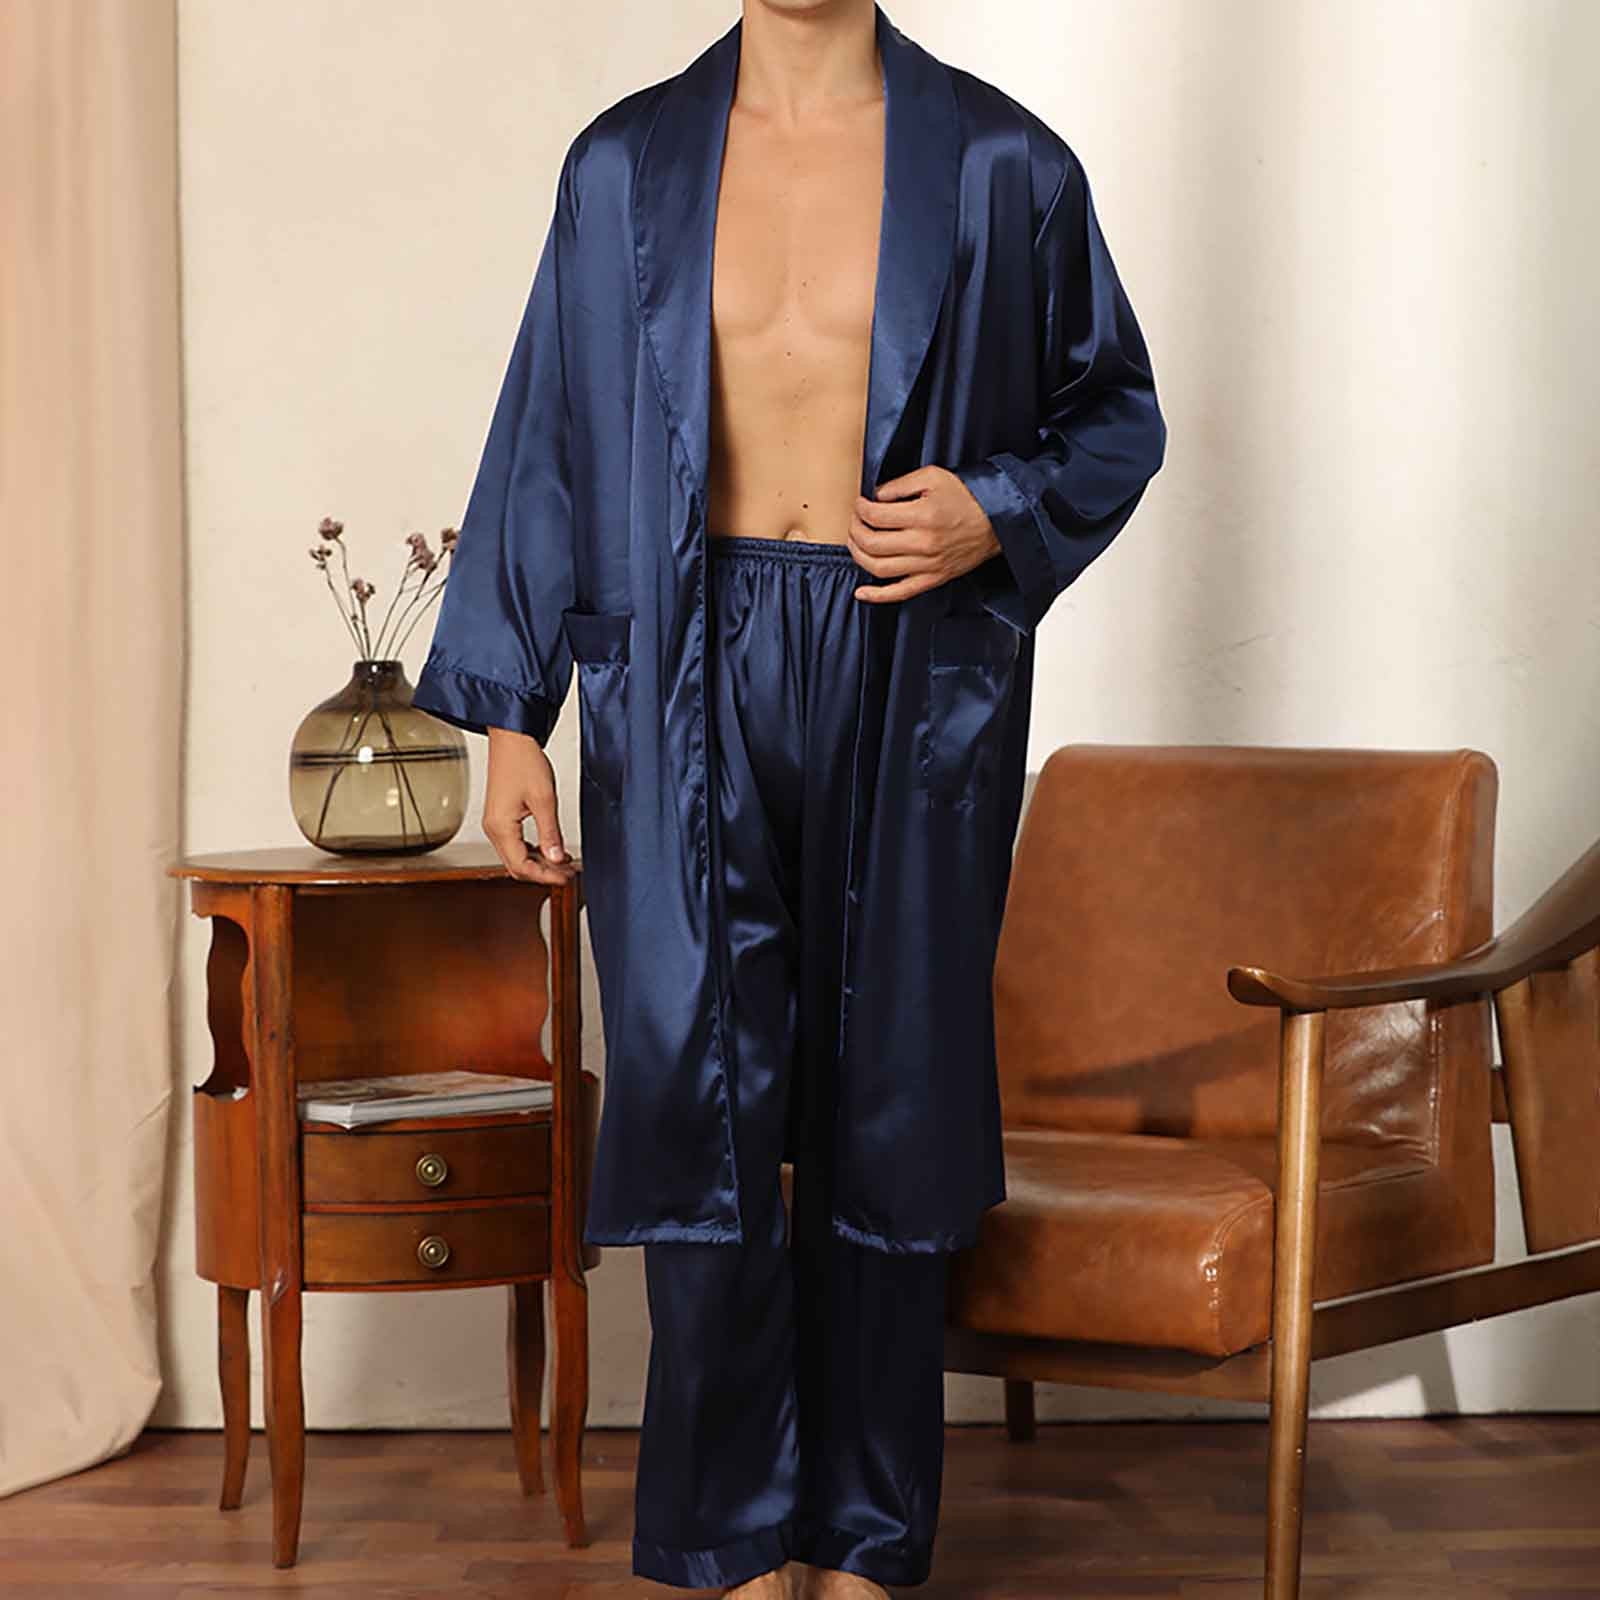 CHGBMOK Clearance Pajamas for Men Lace-Up Silk Bathrobe Pocket